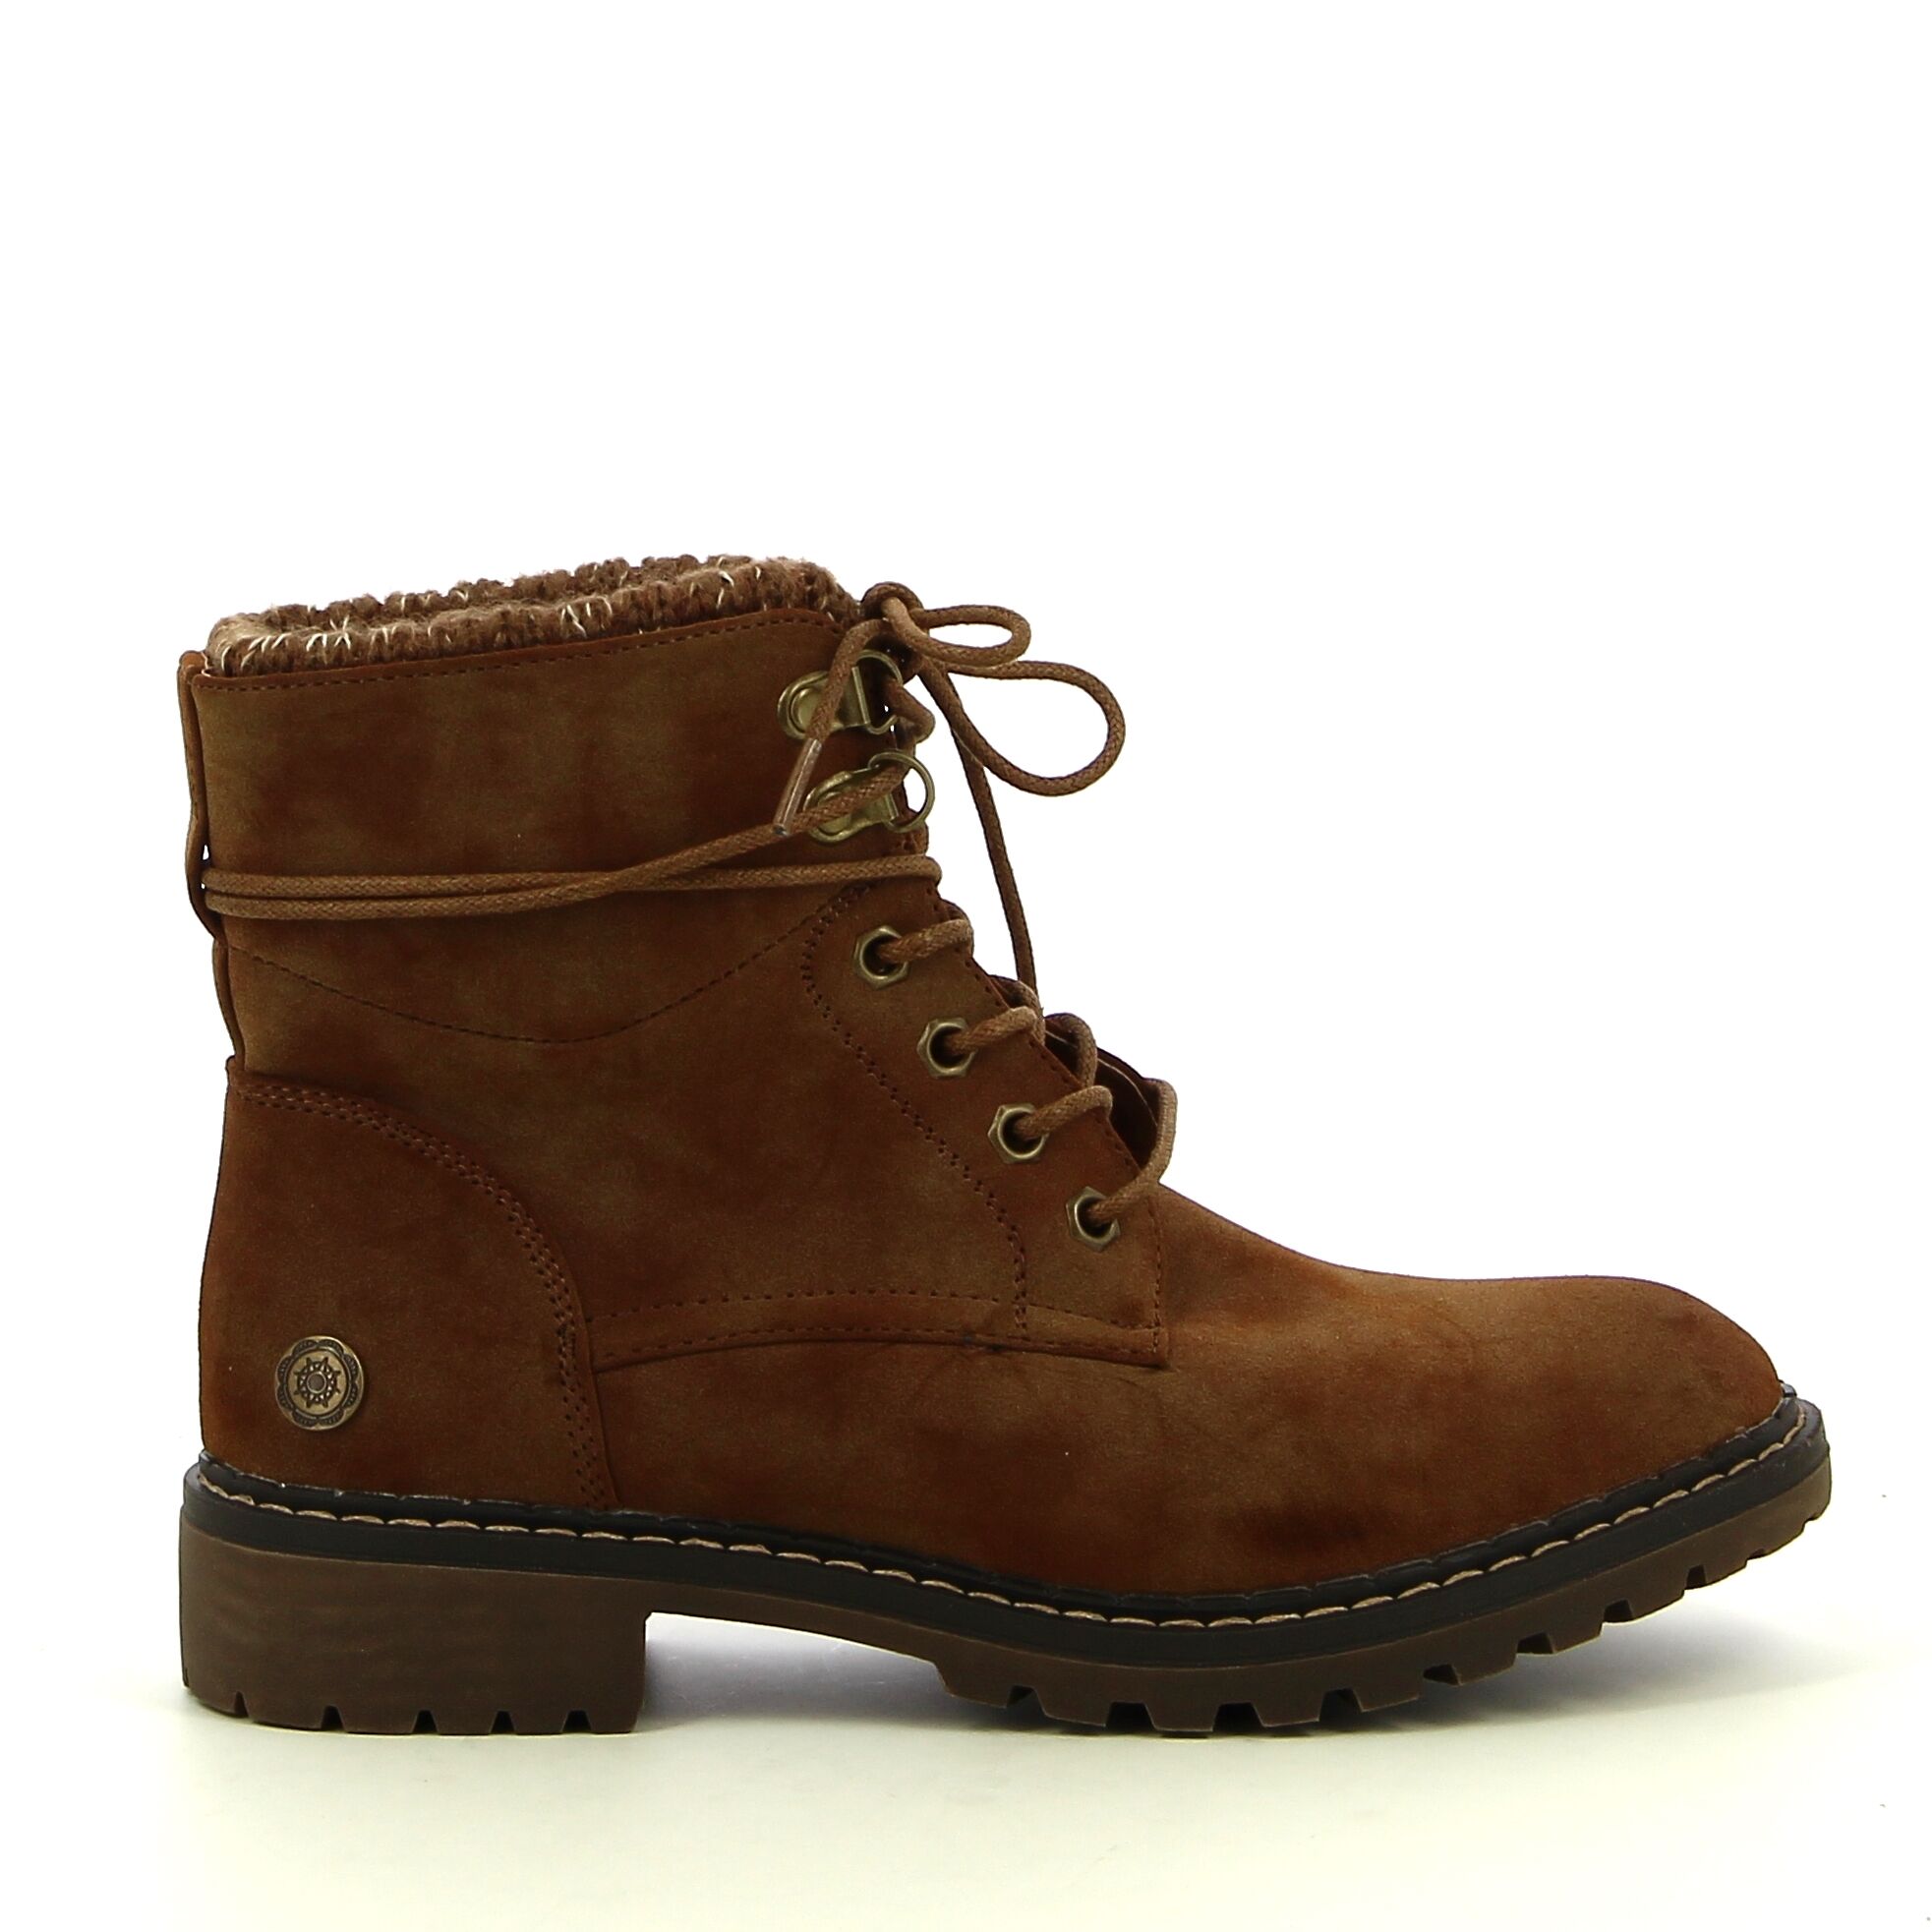 Ken Shoe Fashion - Camel - Boots